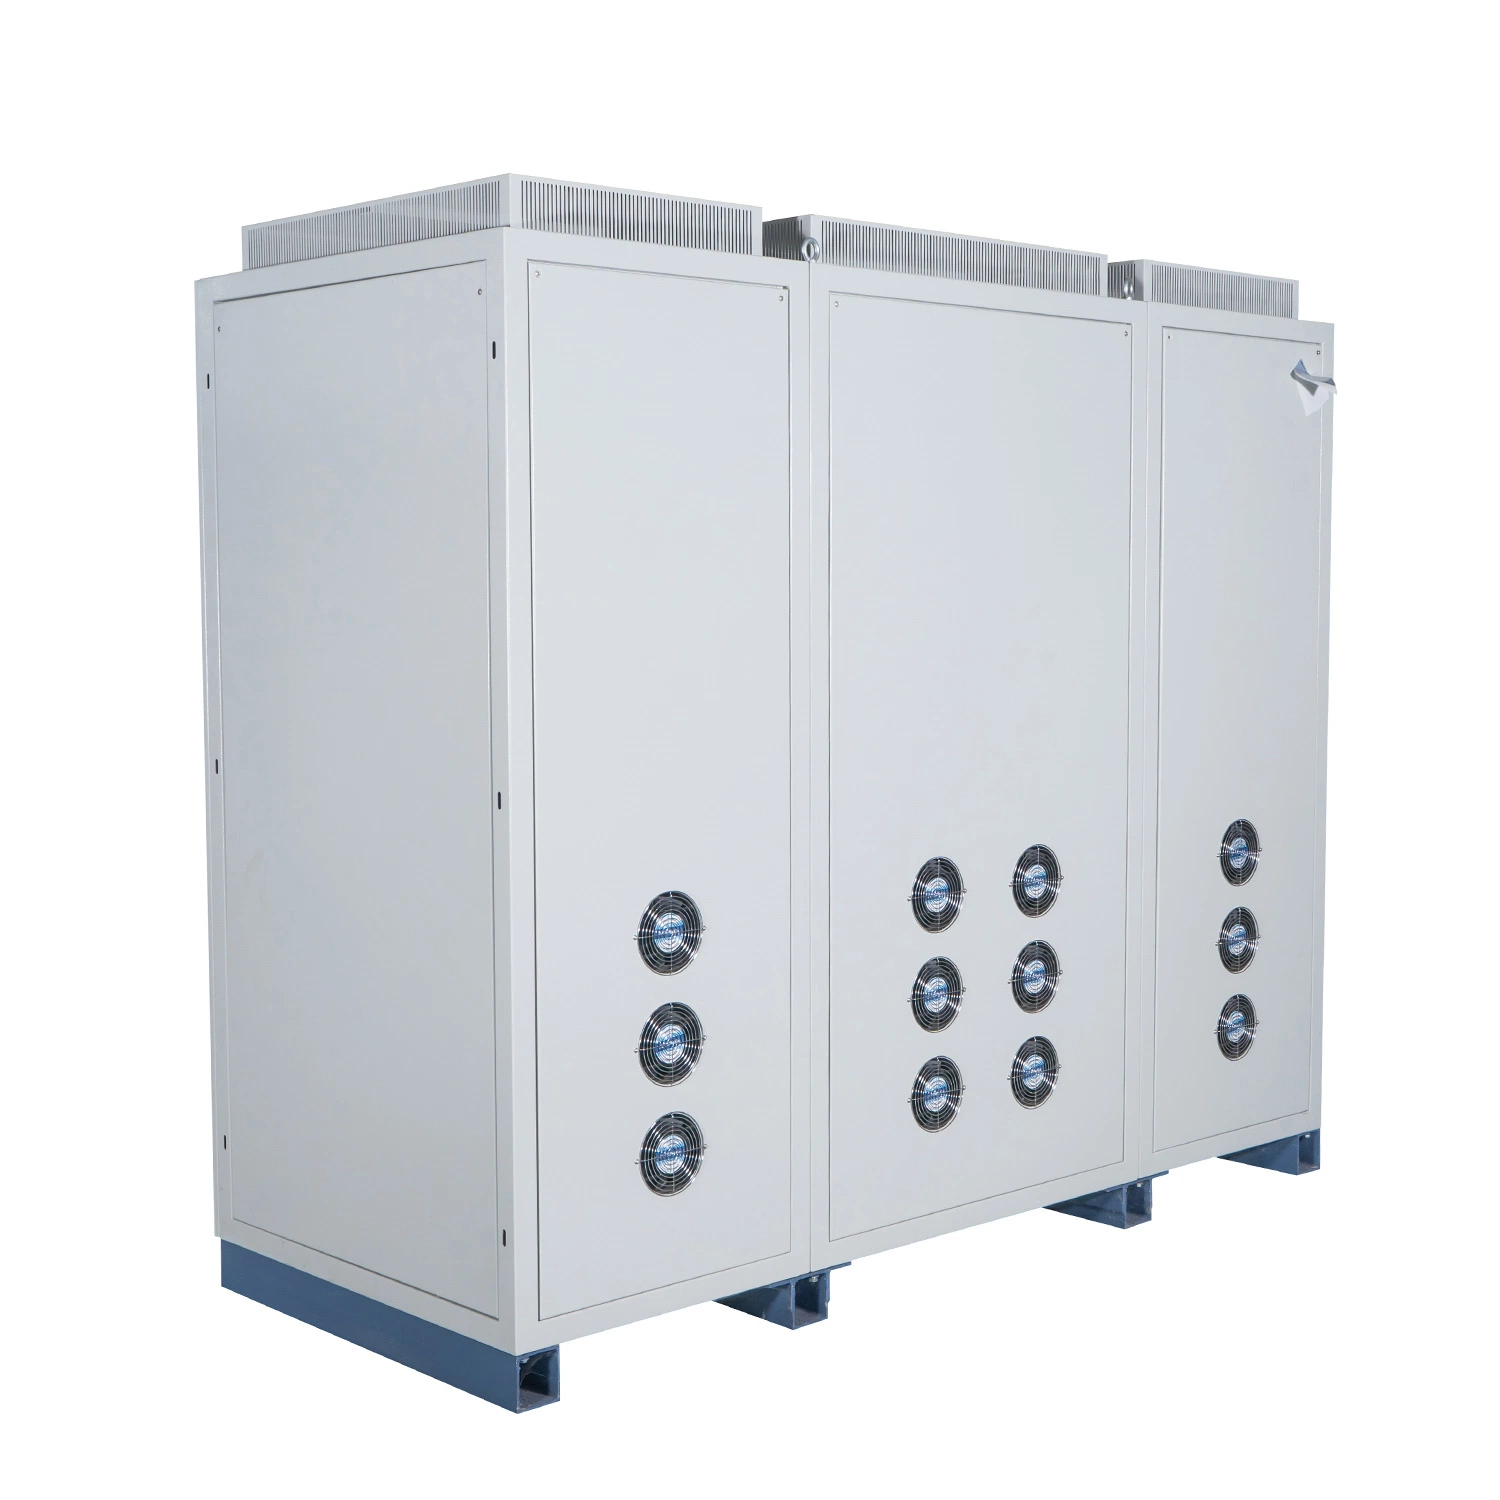 Bi-Directional DC Power Supply UPS EPS System Tes